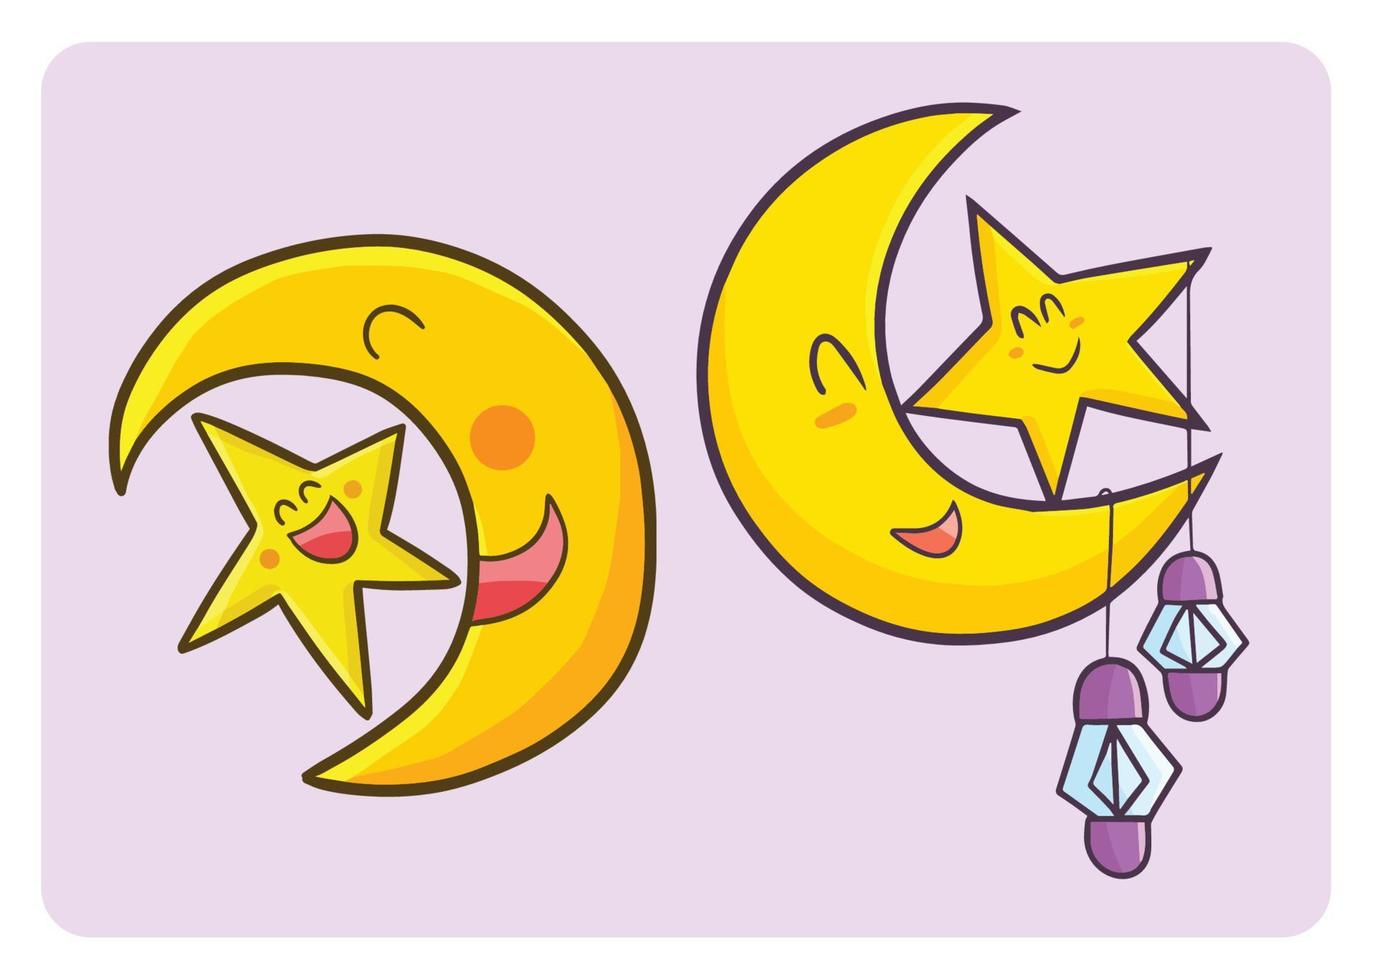 Ramadan moon and star cartoon illustrations vector